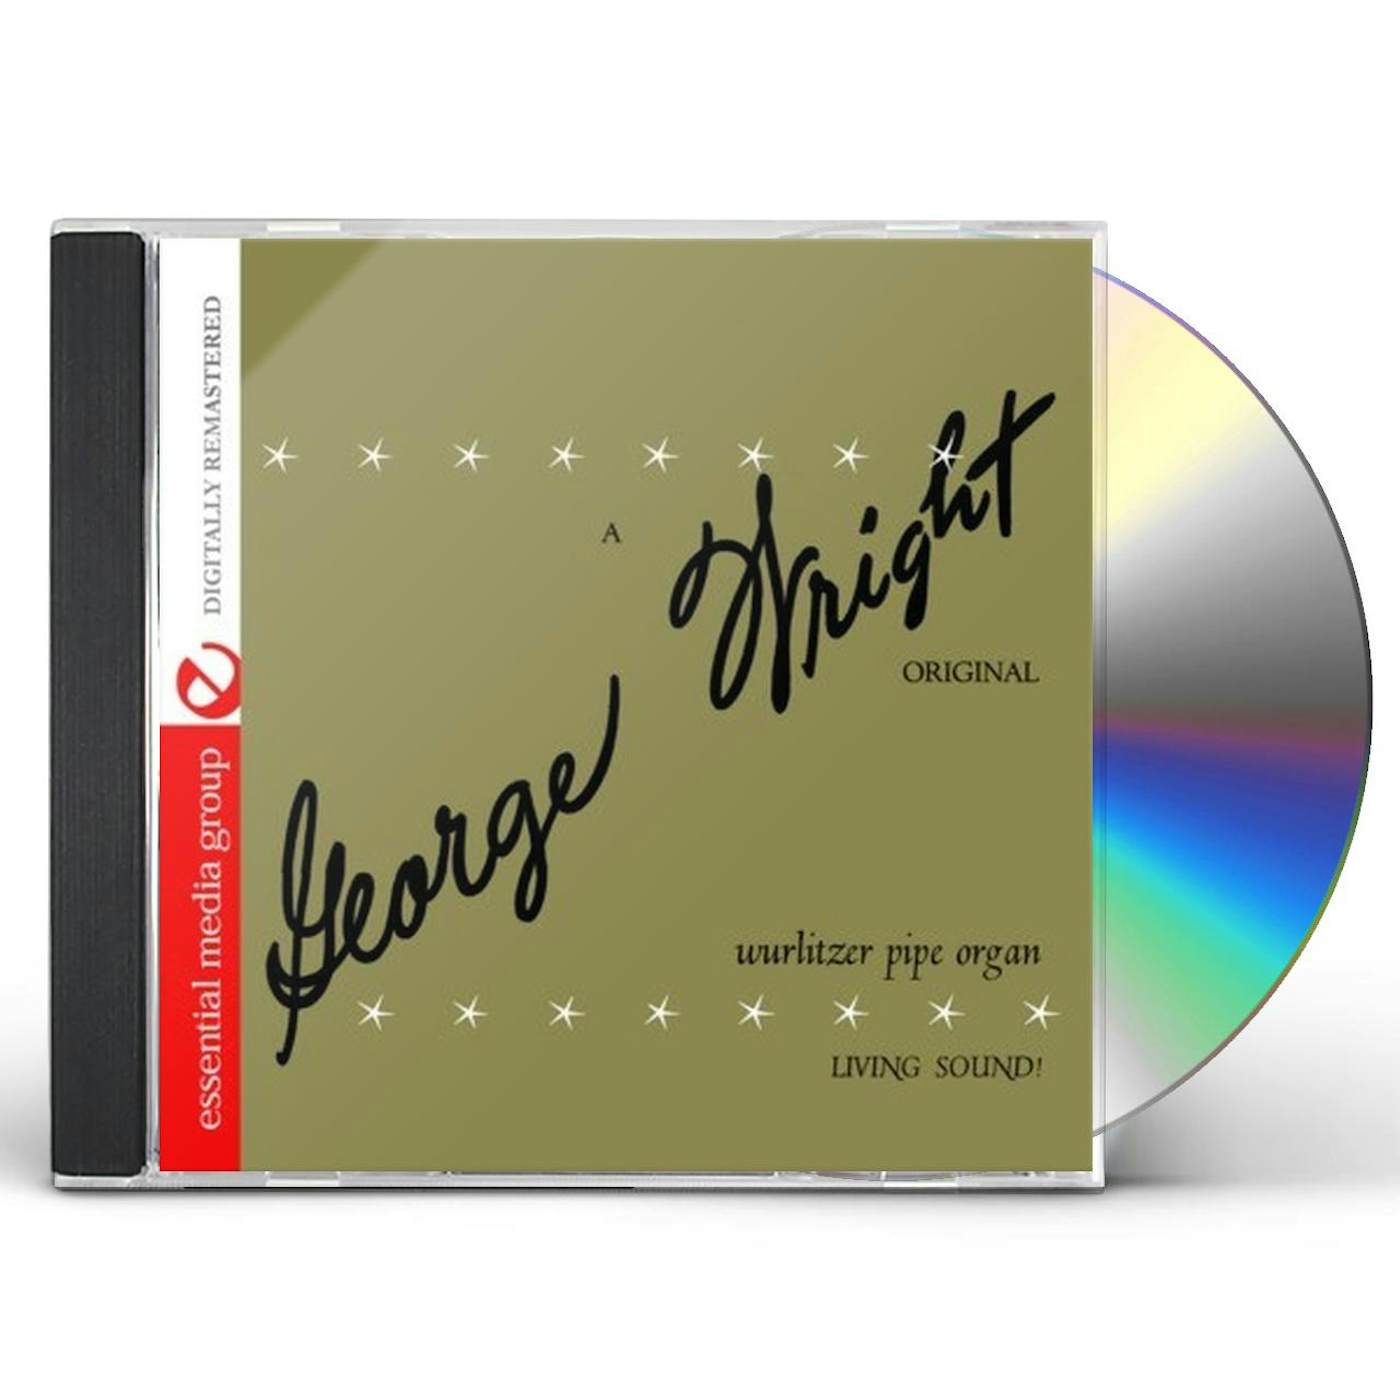 GEORGE WRIGHT ORIGINAL CD